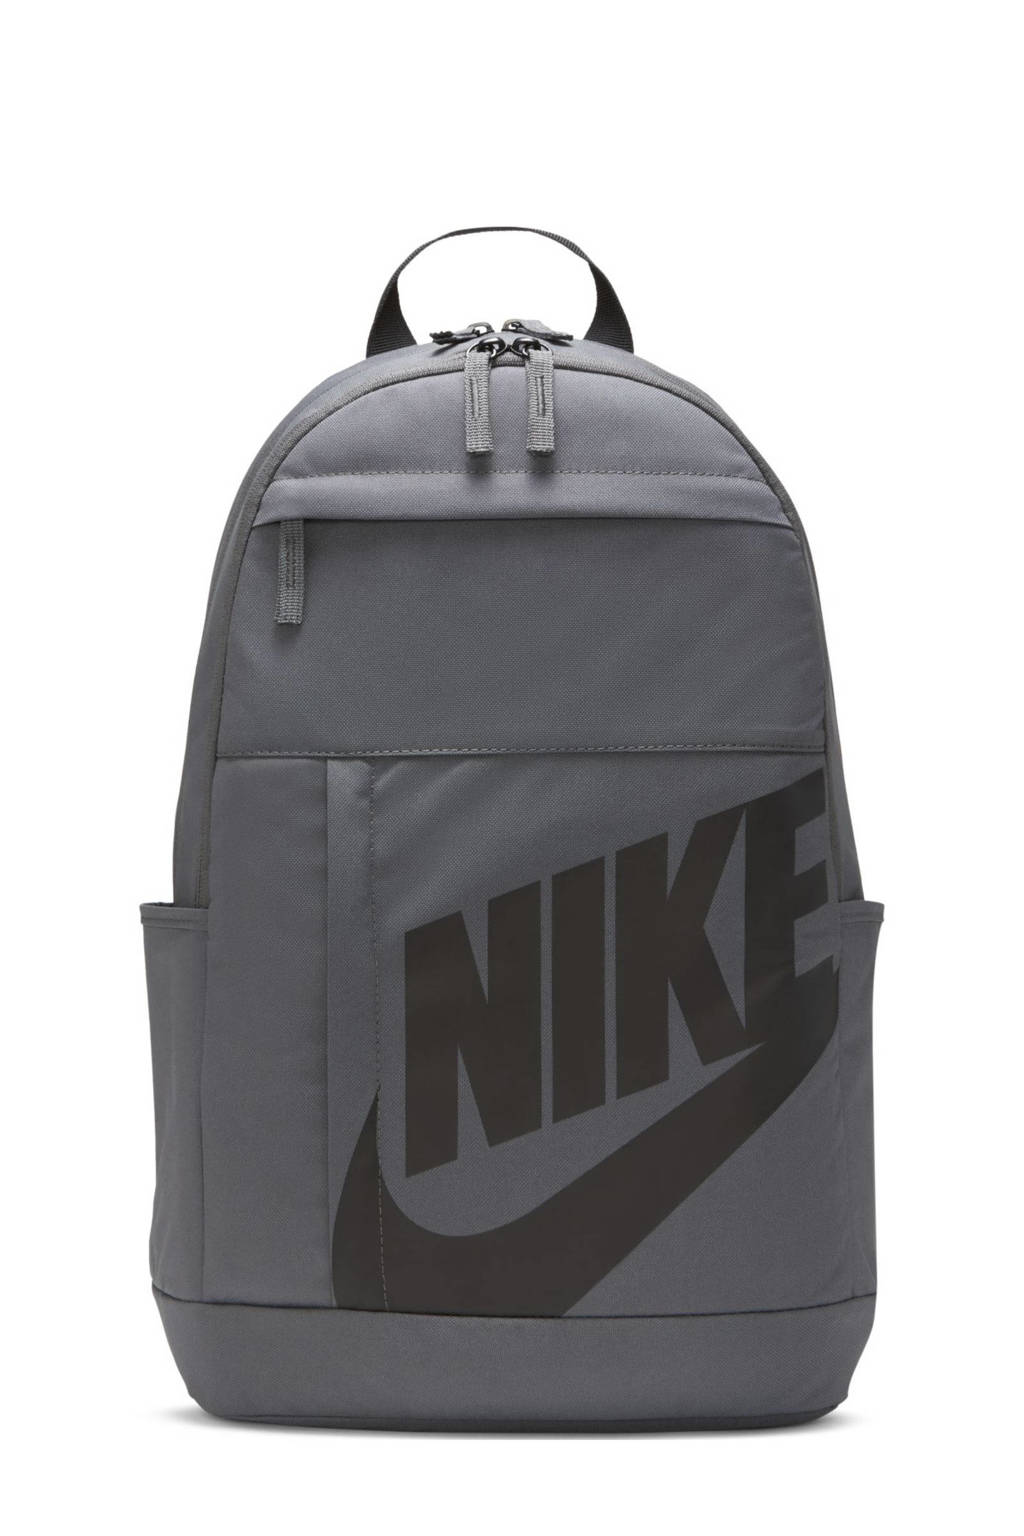 Kangoeroe Gevangene optie Nike rugzak Elemental grijs/zwart | wehkamp